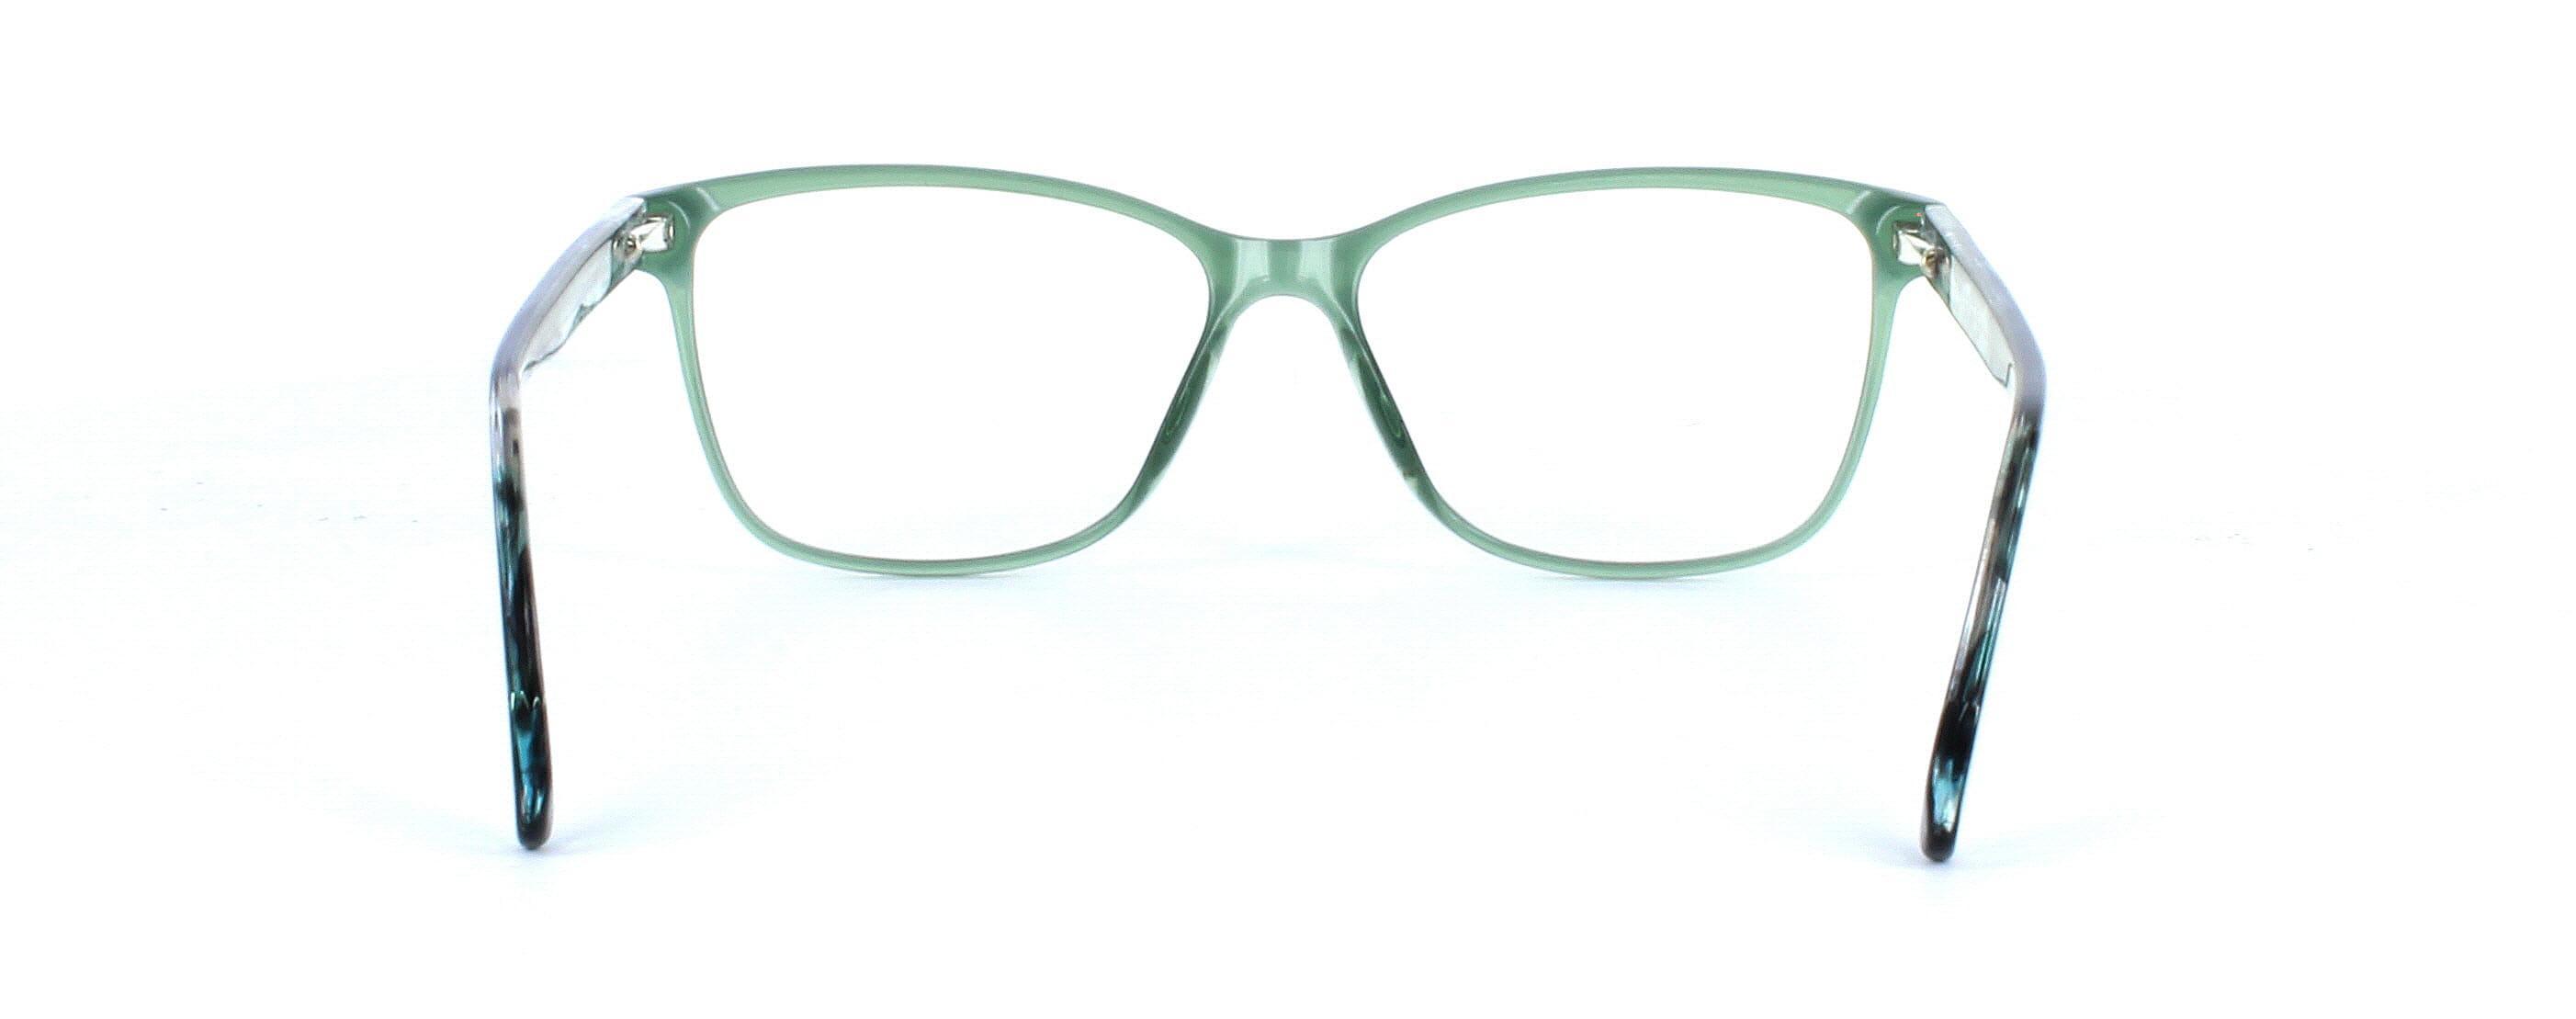 Eris - Ladies plastic rectangular shaped glasses frame - crystal green - image view 3